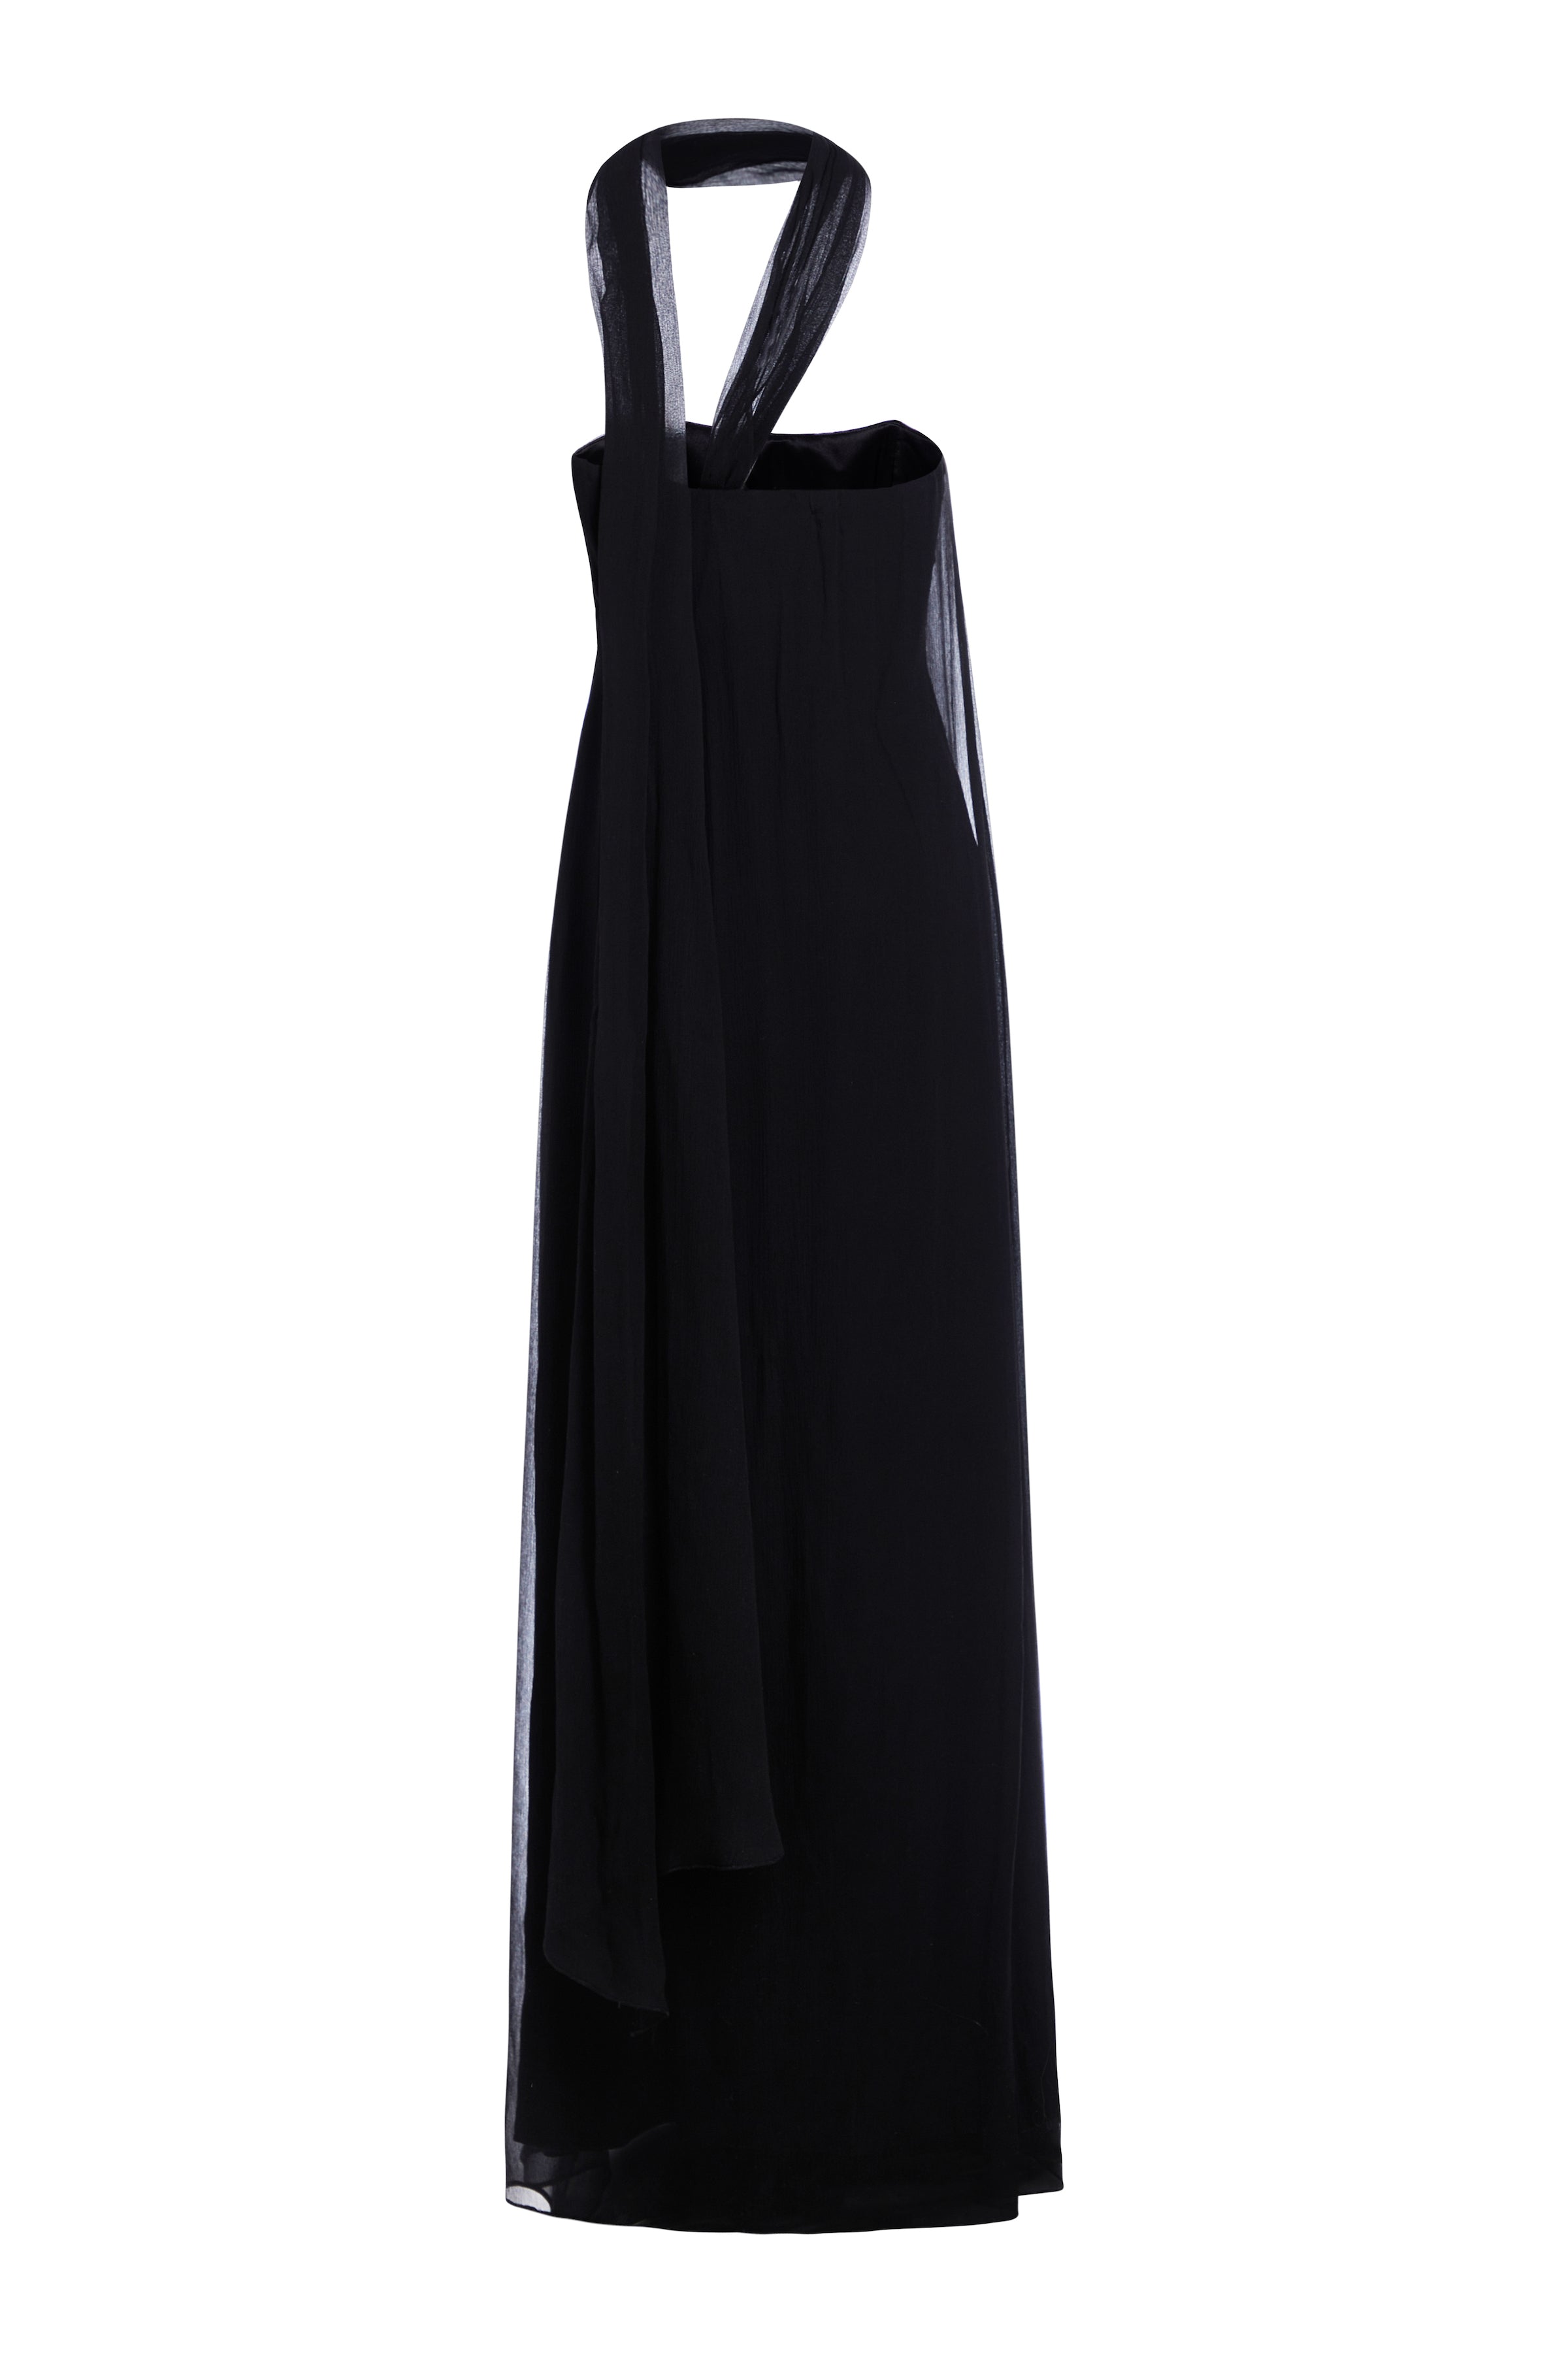 Catalina Black Chiffon Scarf Gown